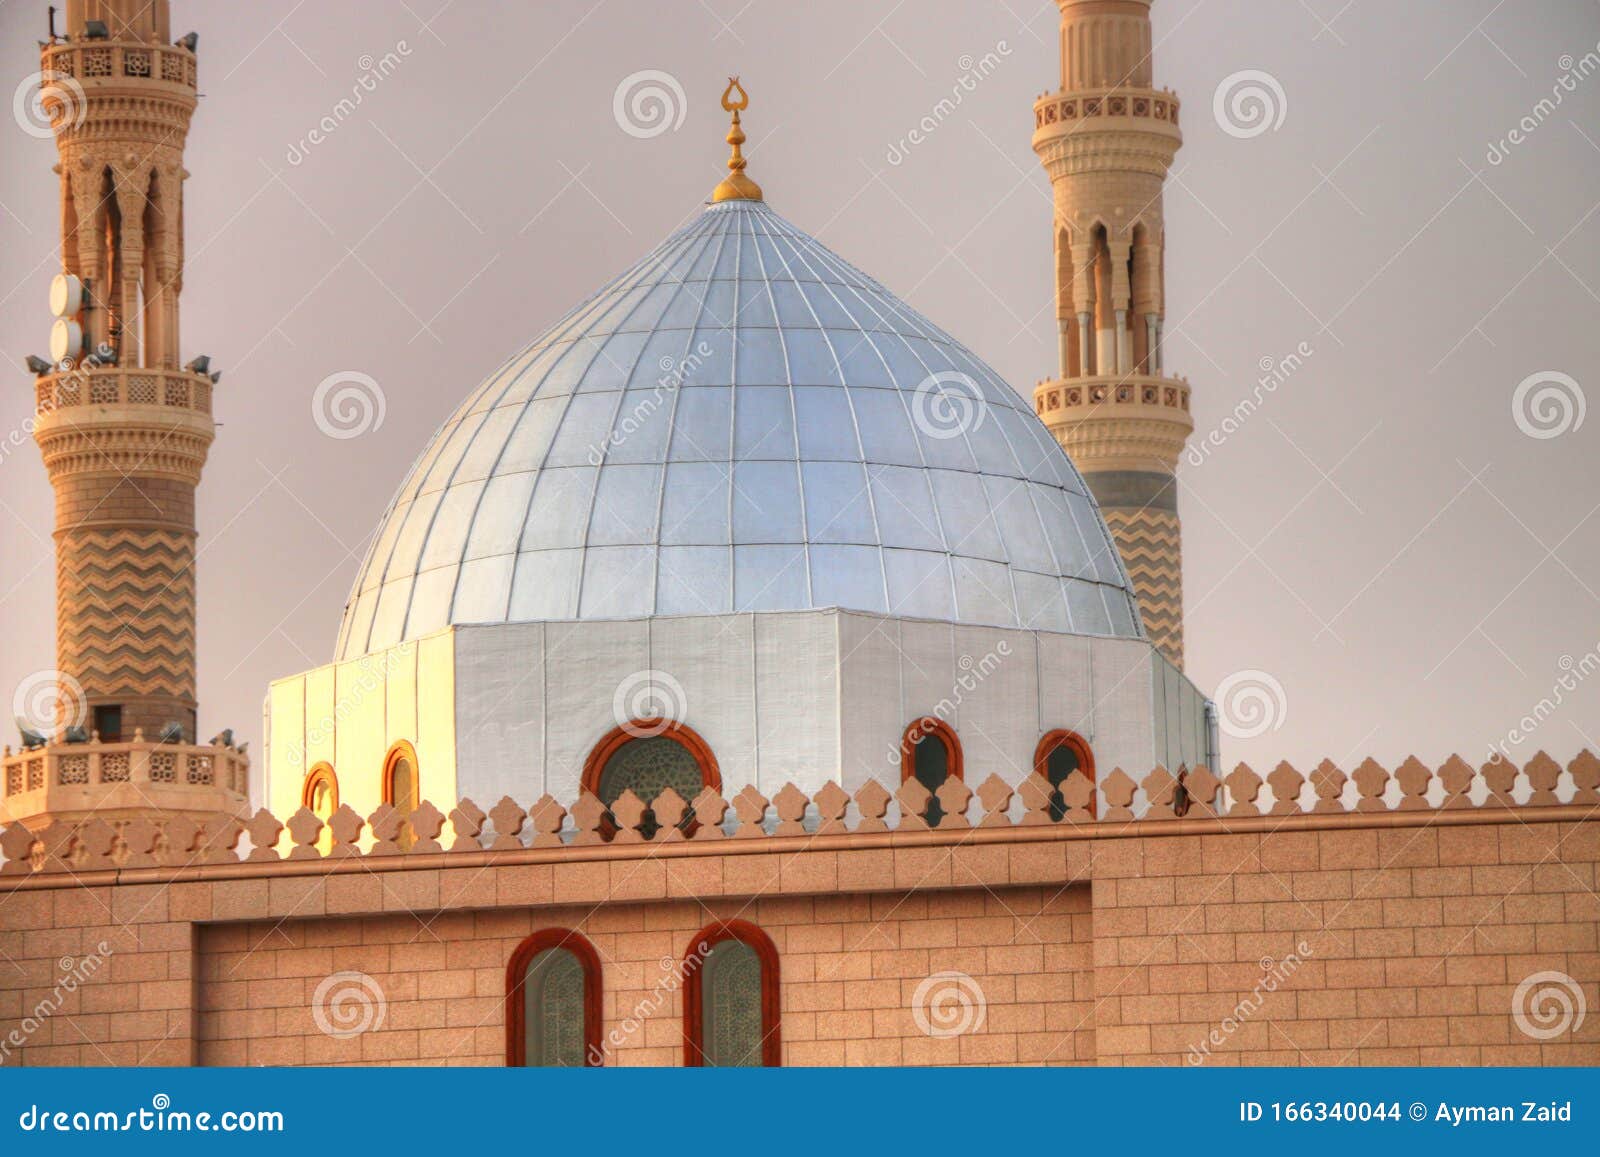 medina/saudi arabia - may 30, 2015: prophet mohammed mosque, al masjid an nabawi